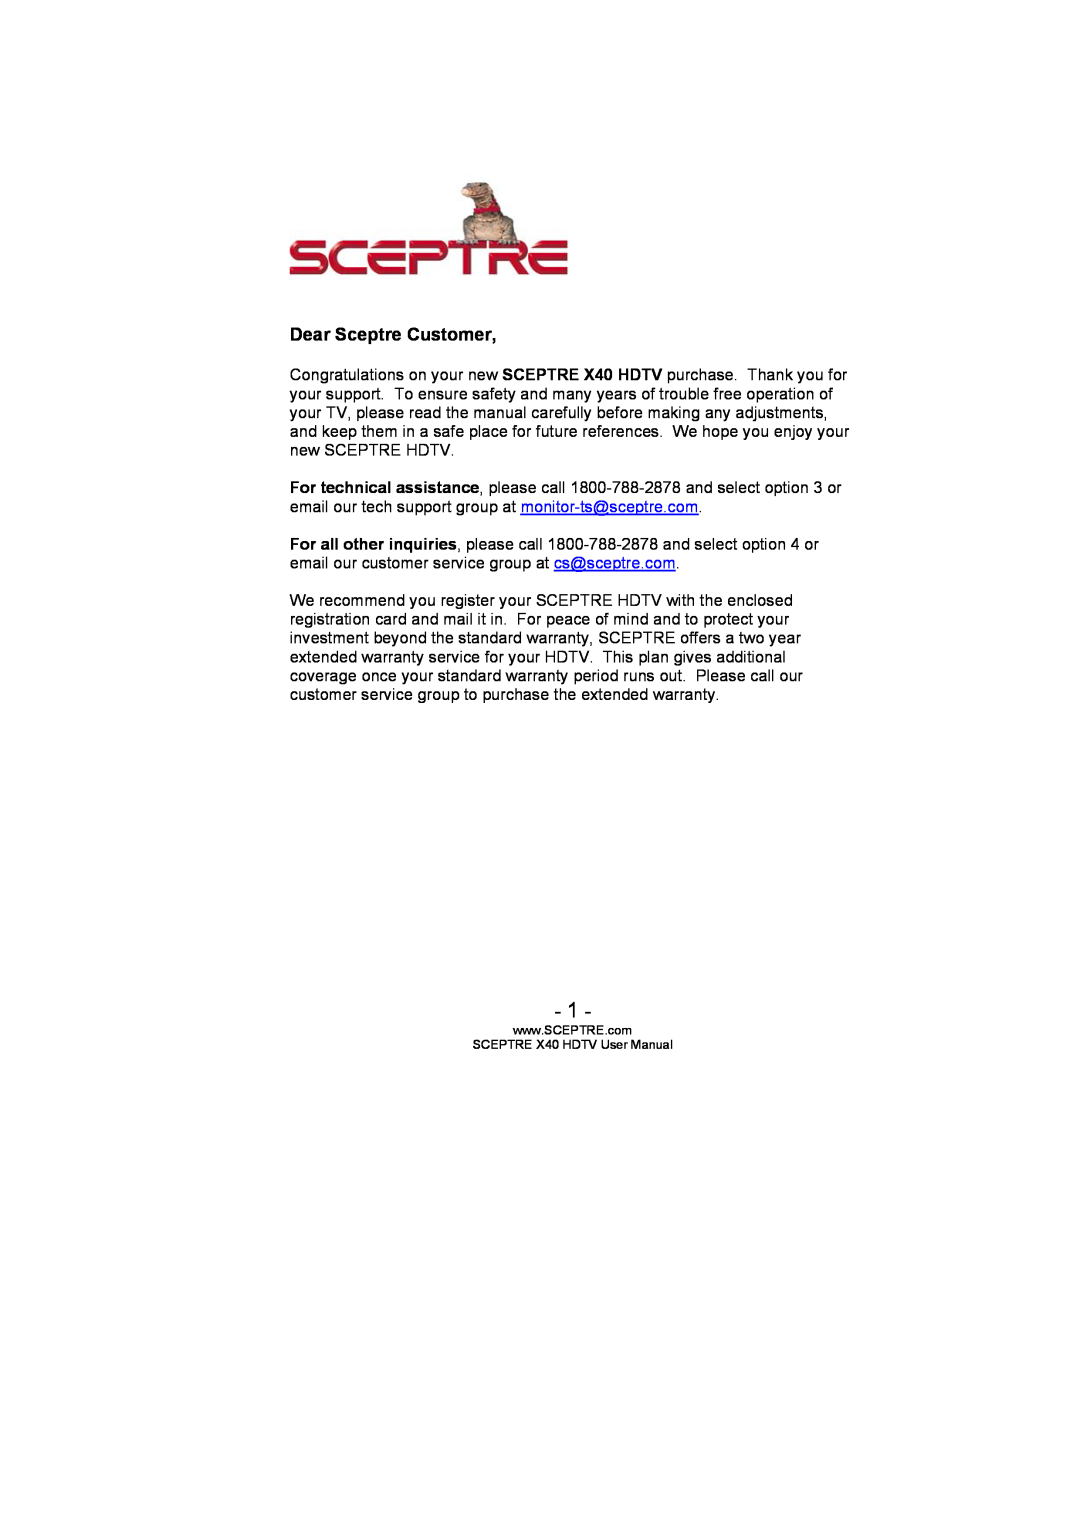 Sceptre Technologies user manual Dear Sceptre Customer, SCEPTRE X40 HDTV User Manual 